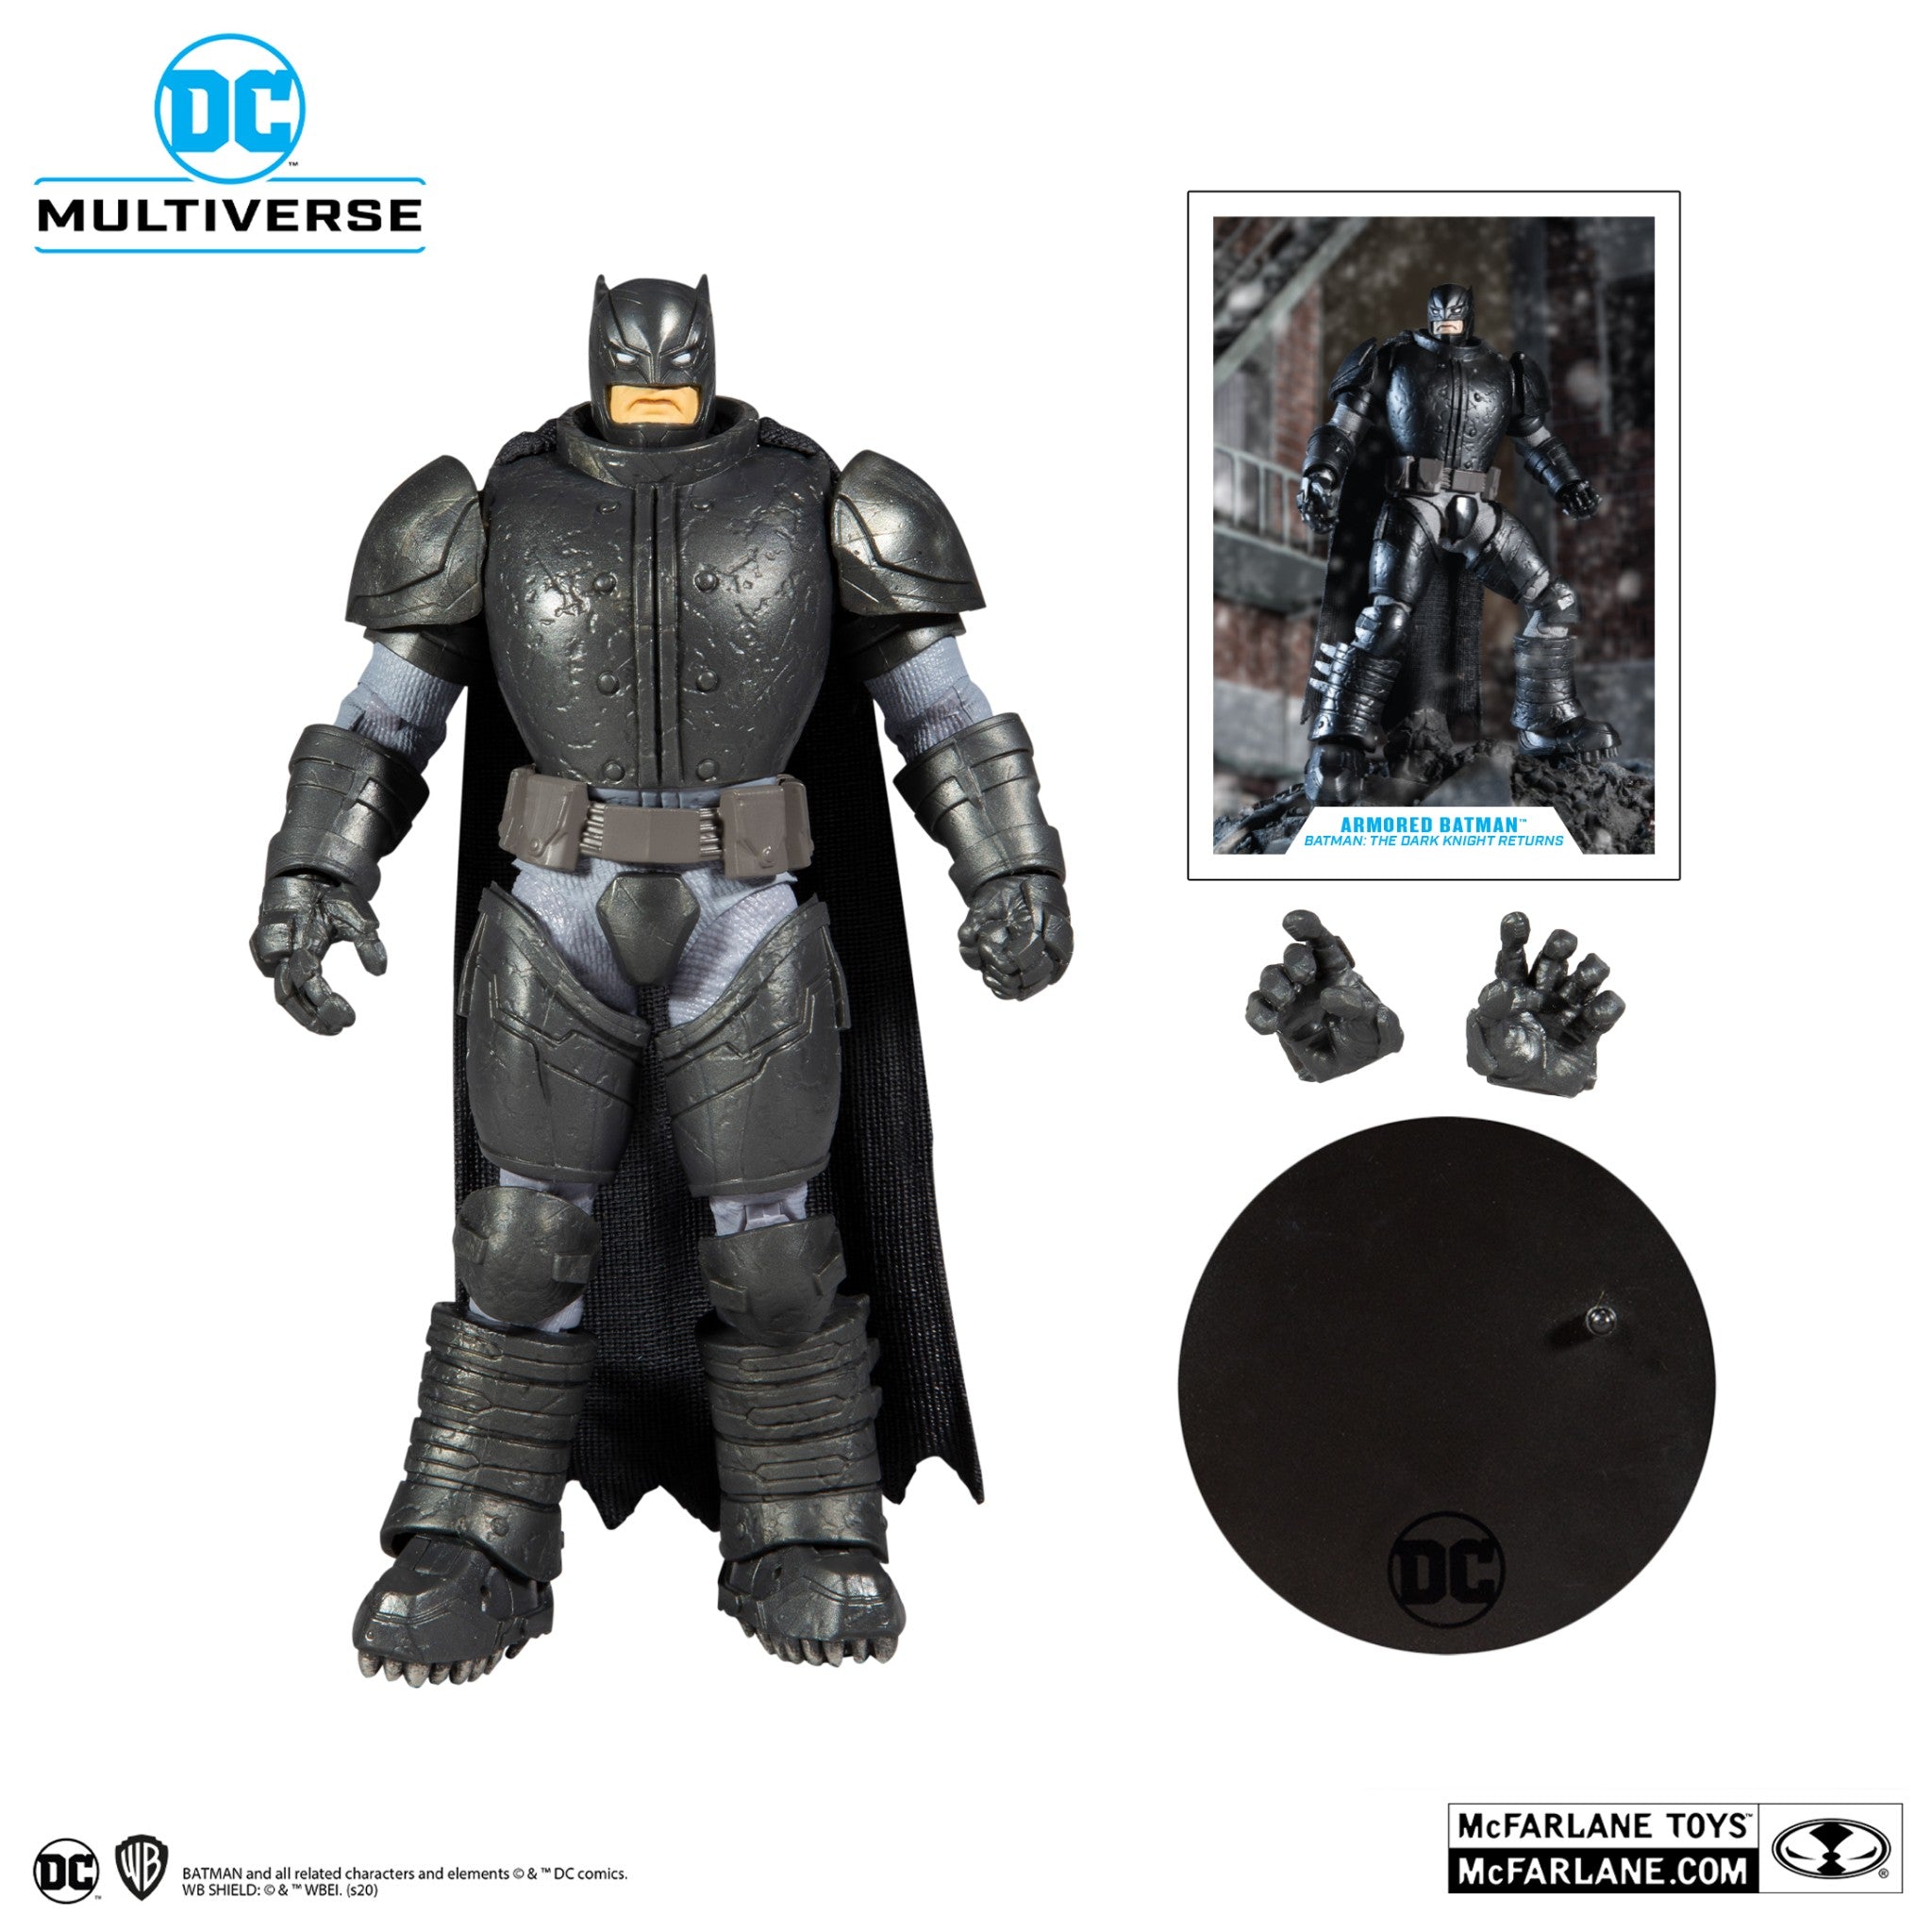 DC Multiverse The Dark Knight Returns Armored Batman - McFarlane Toys-2